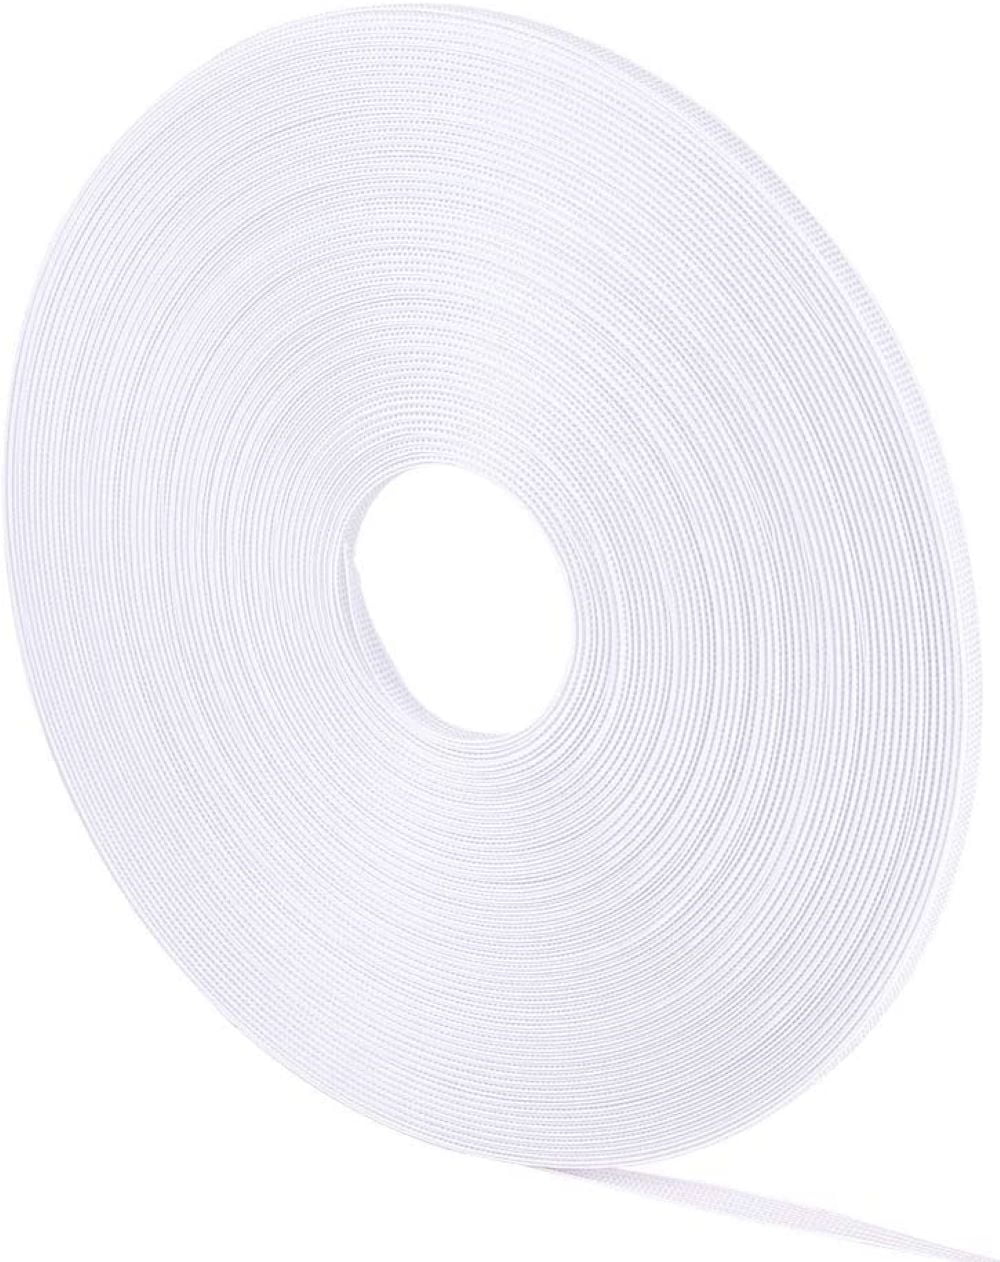 VIVIPA 50 Yards Polyester Boning for Sewing - Sew-Through Low Density Boning for Corsets, Nursing Caps, Bridal Gowns (6mm, White)